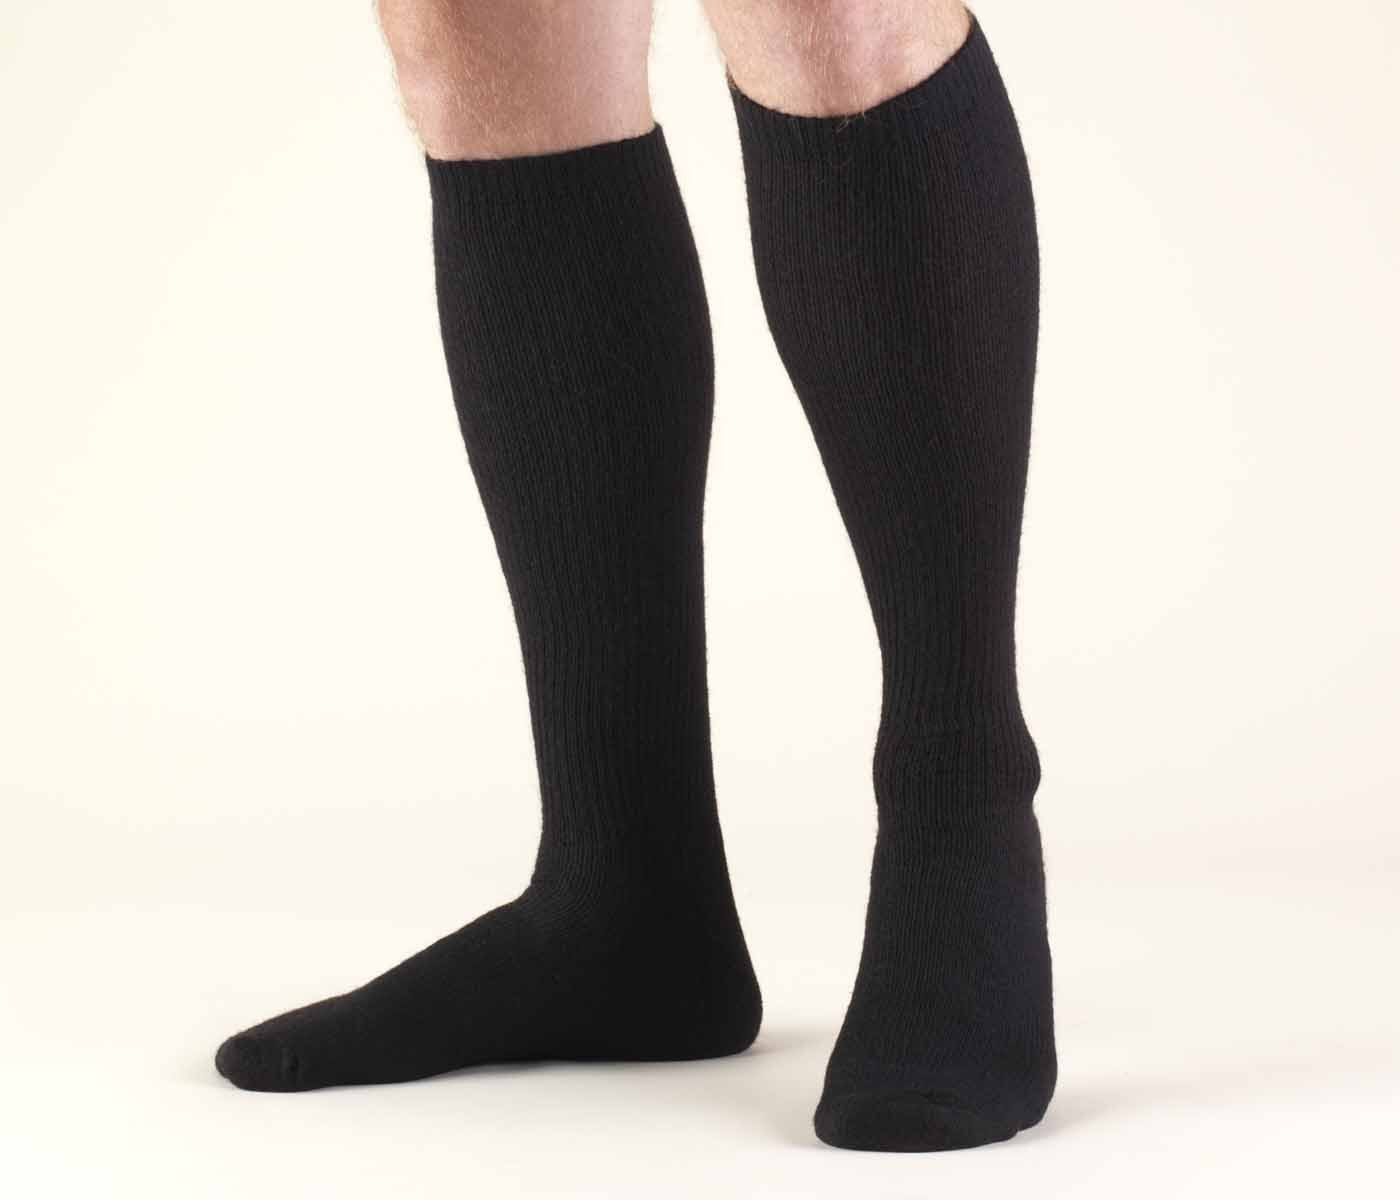 Truform Knee High Compression Socks - Black, Medium, 8-15mmhg